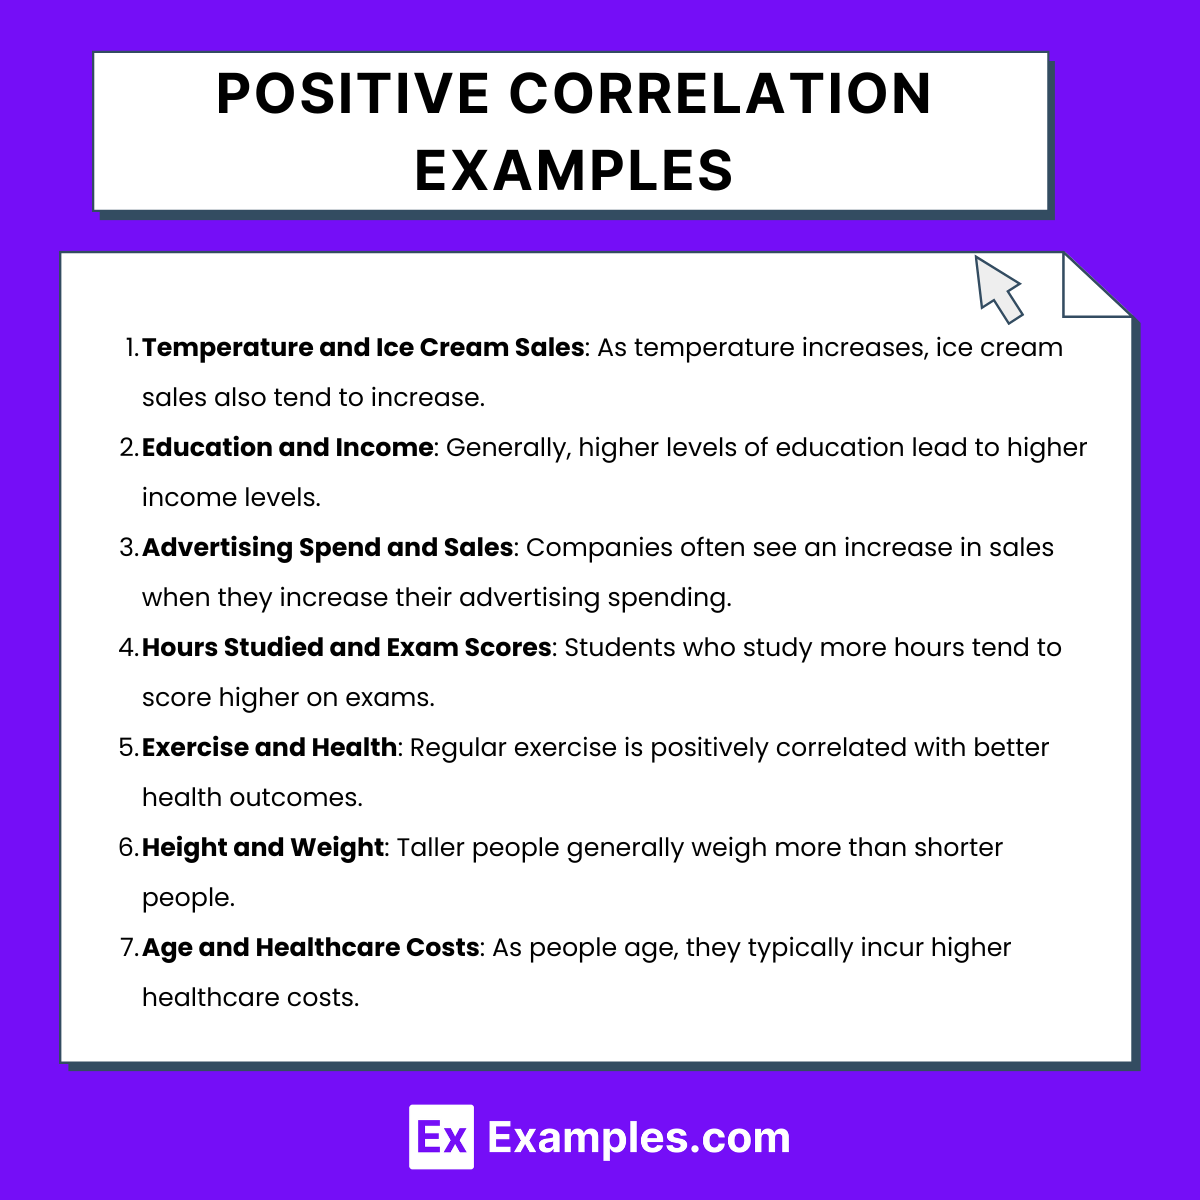 Positive Correlation Examples